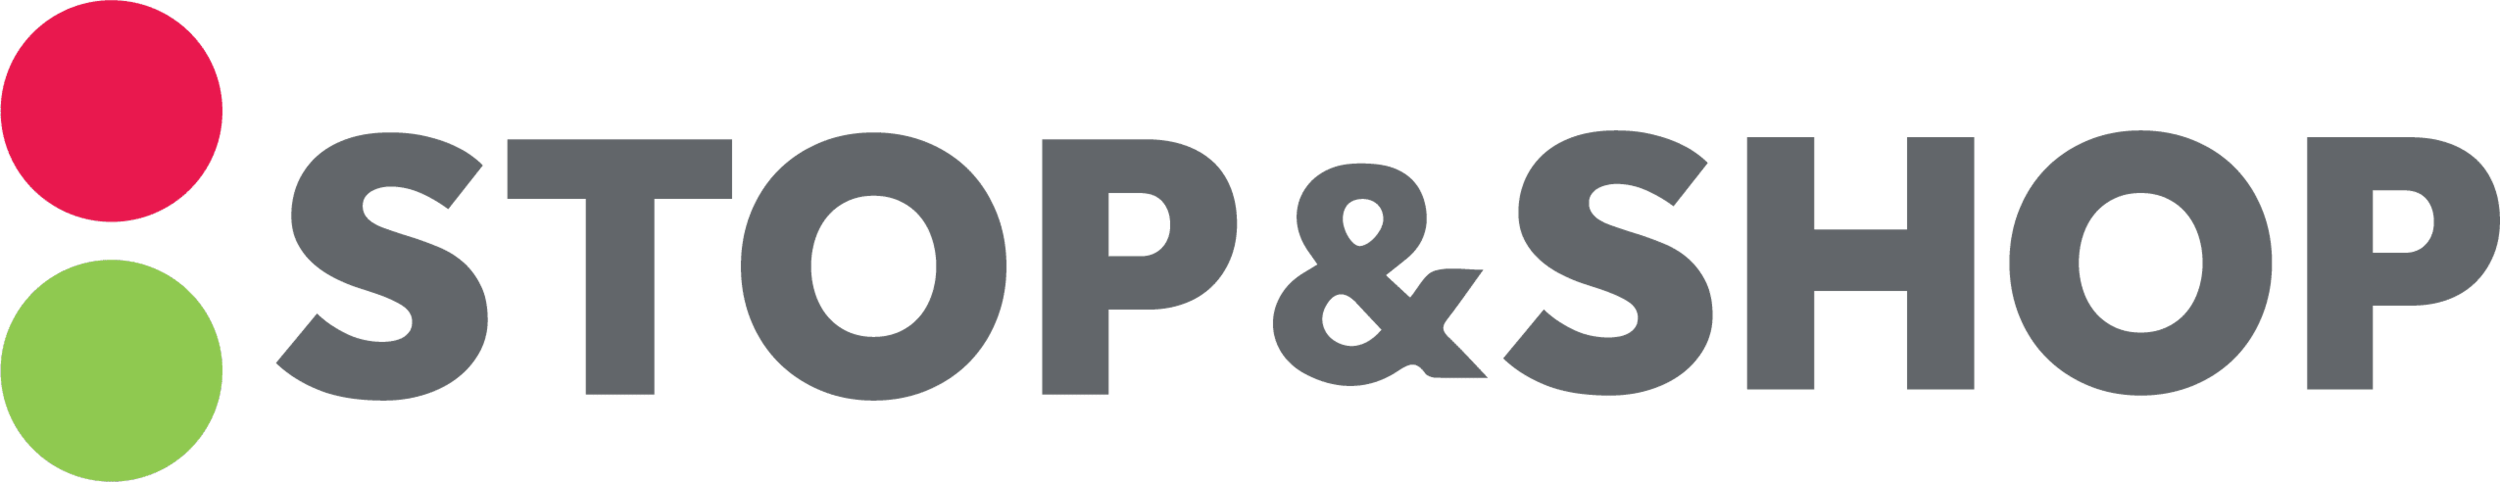 StopandShop-Logo.png